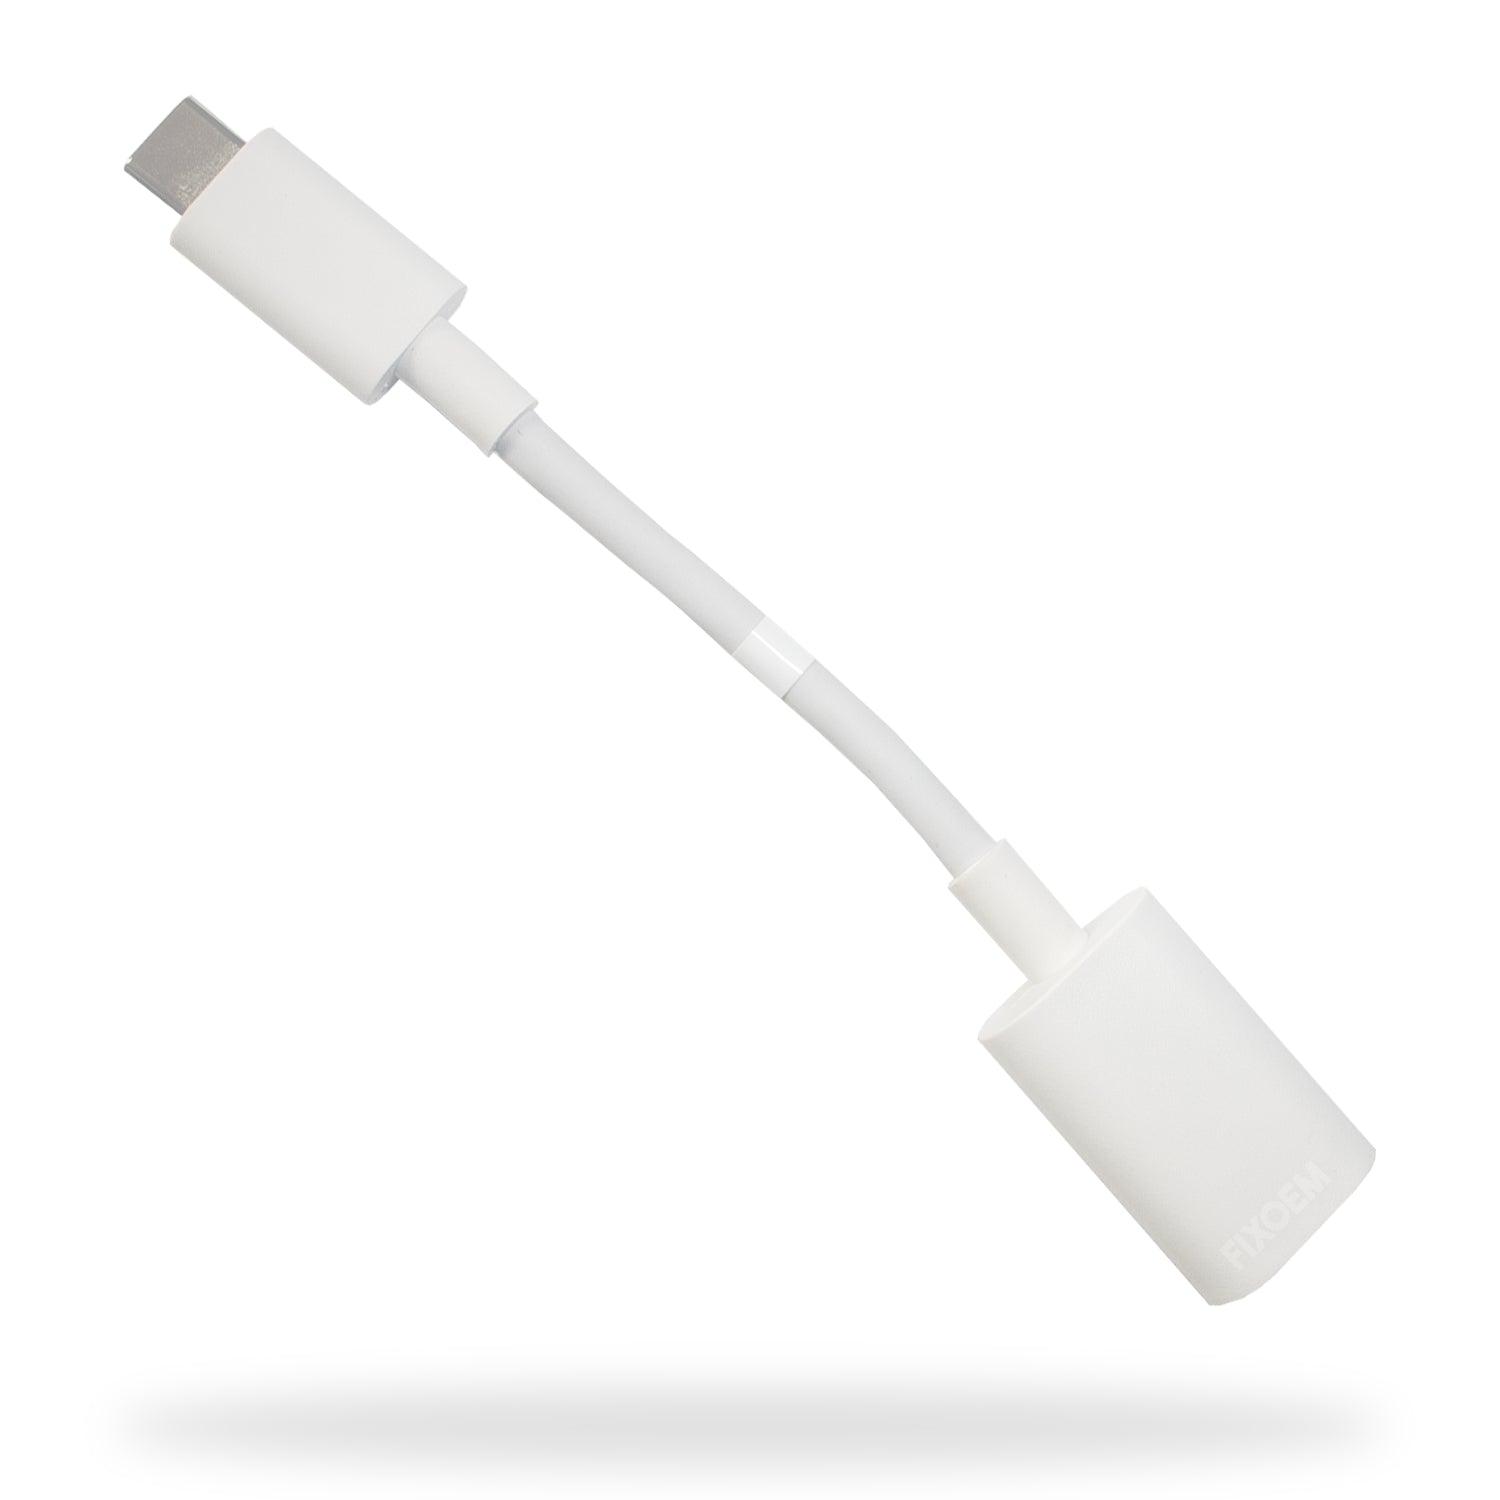 adaptador (OTG) USB-A salida C Huawei Color Blanco Original |+2,000 reseñas 4.8/5 ⭐